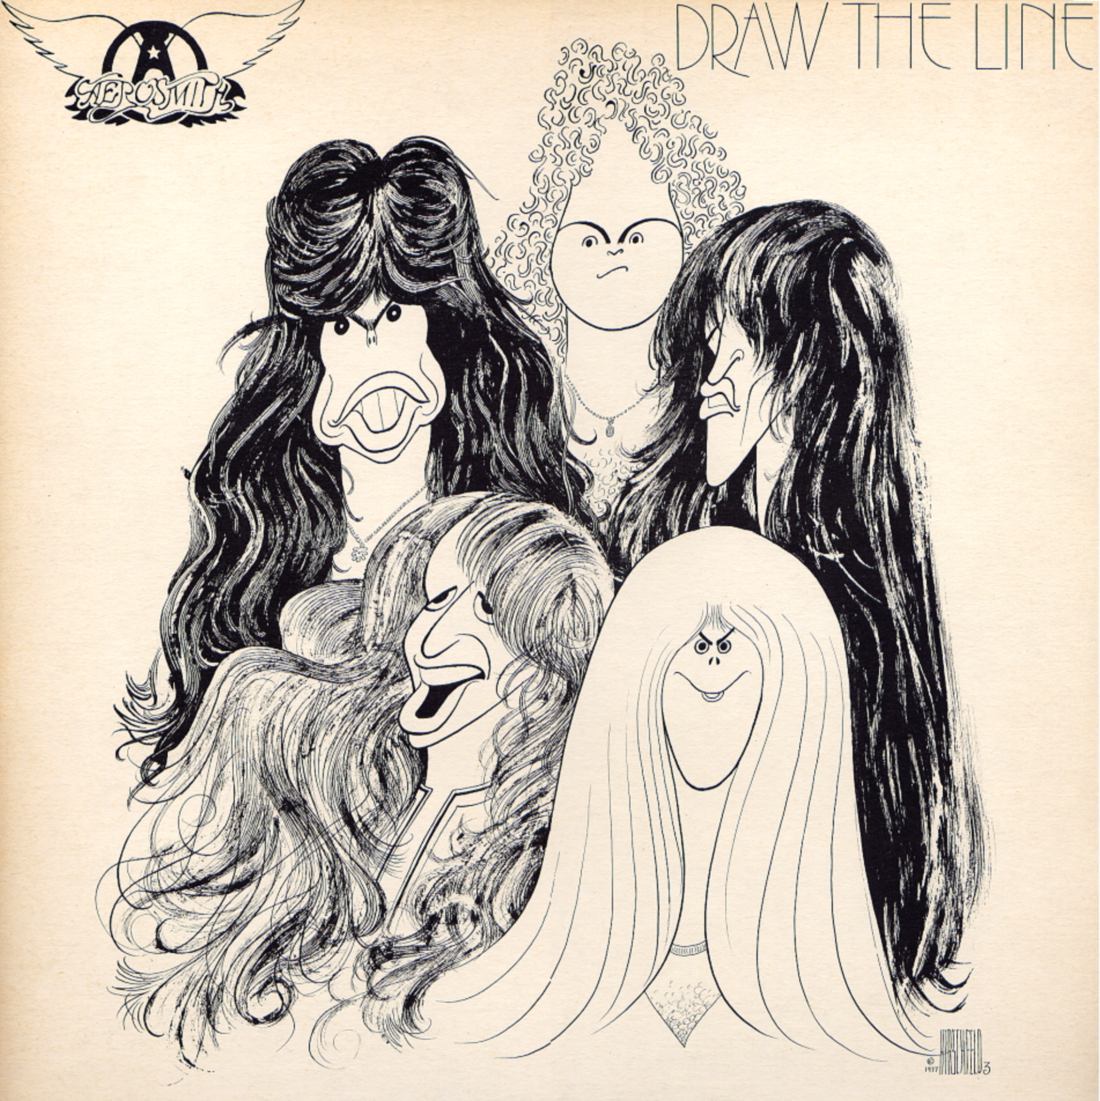 Aerosmith_Draw the Line_1